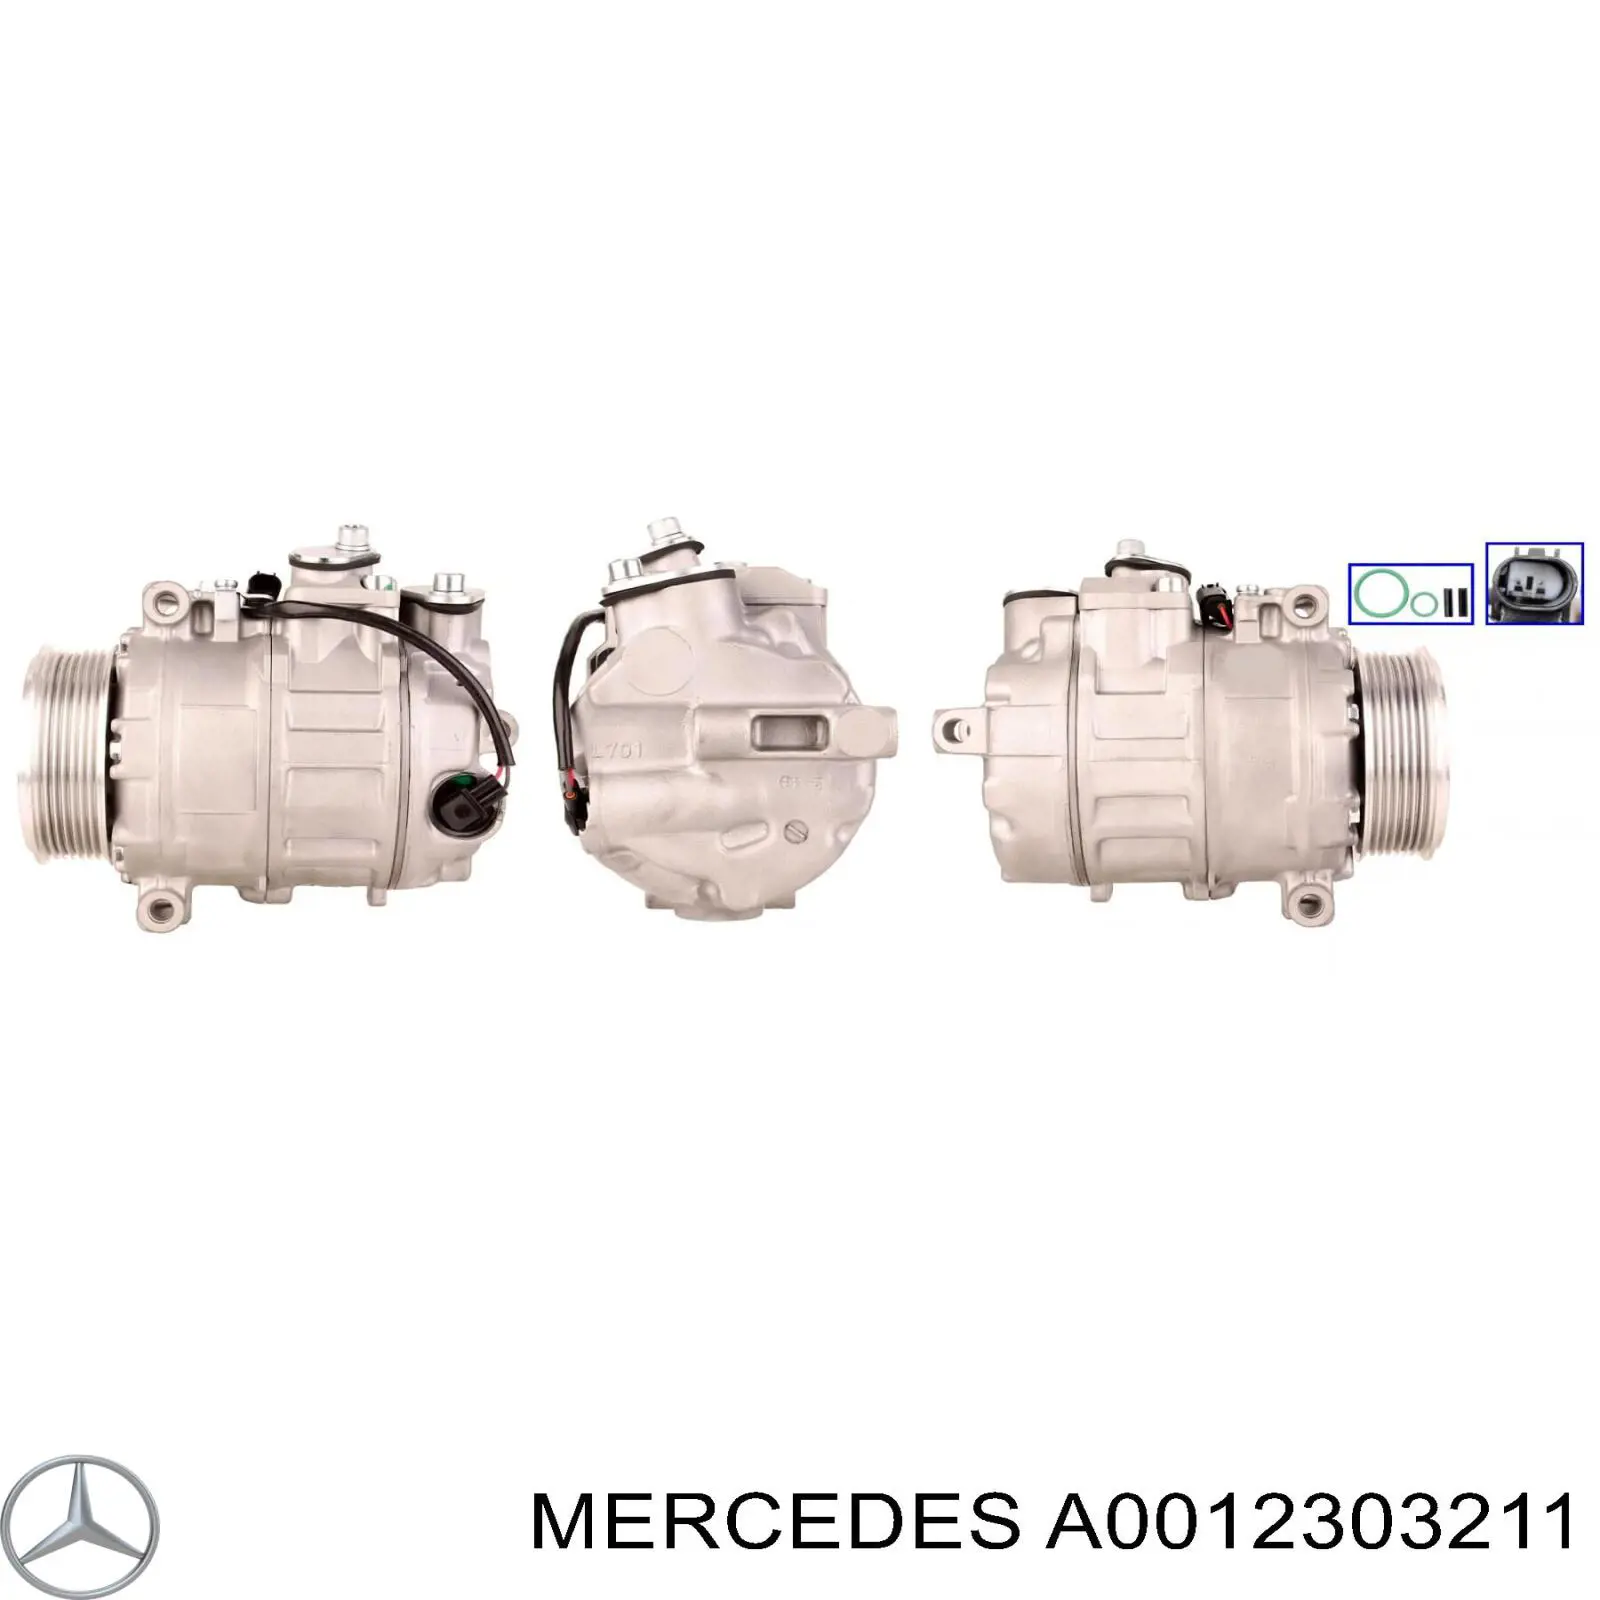 A0012303211 Mercedes compresor de aire acondicionado